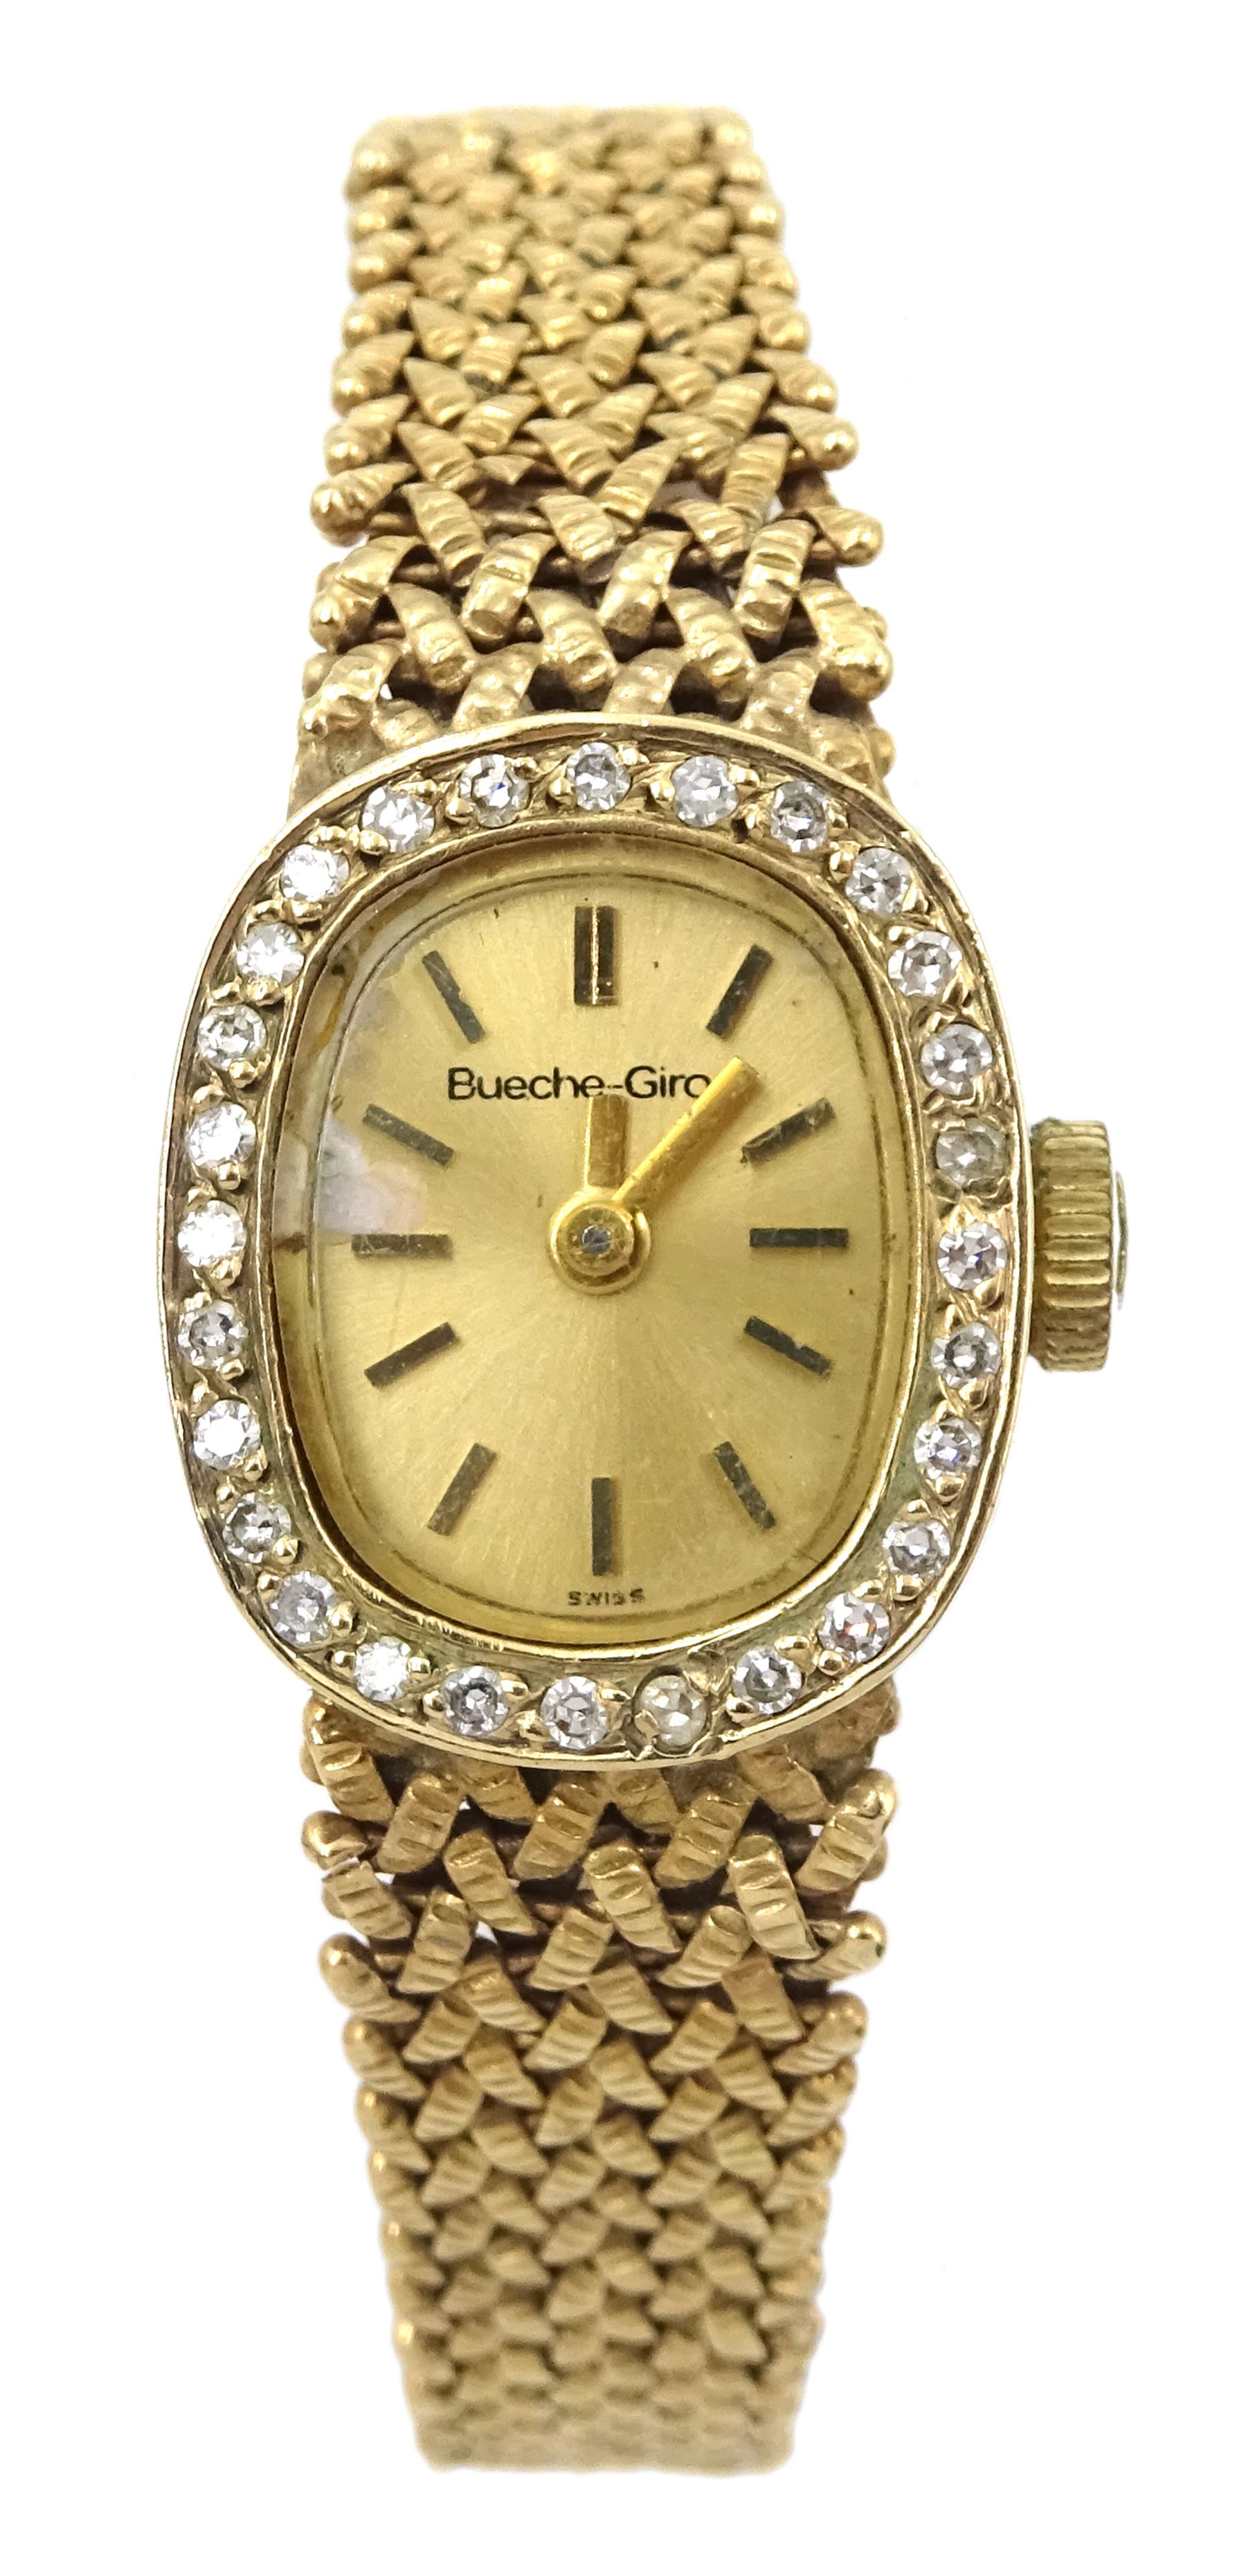 DS Buche-Girod 9ct gold ladies bracelet wristwatch, with diamond set ...